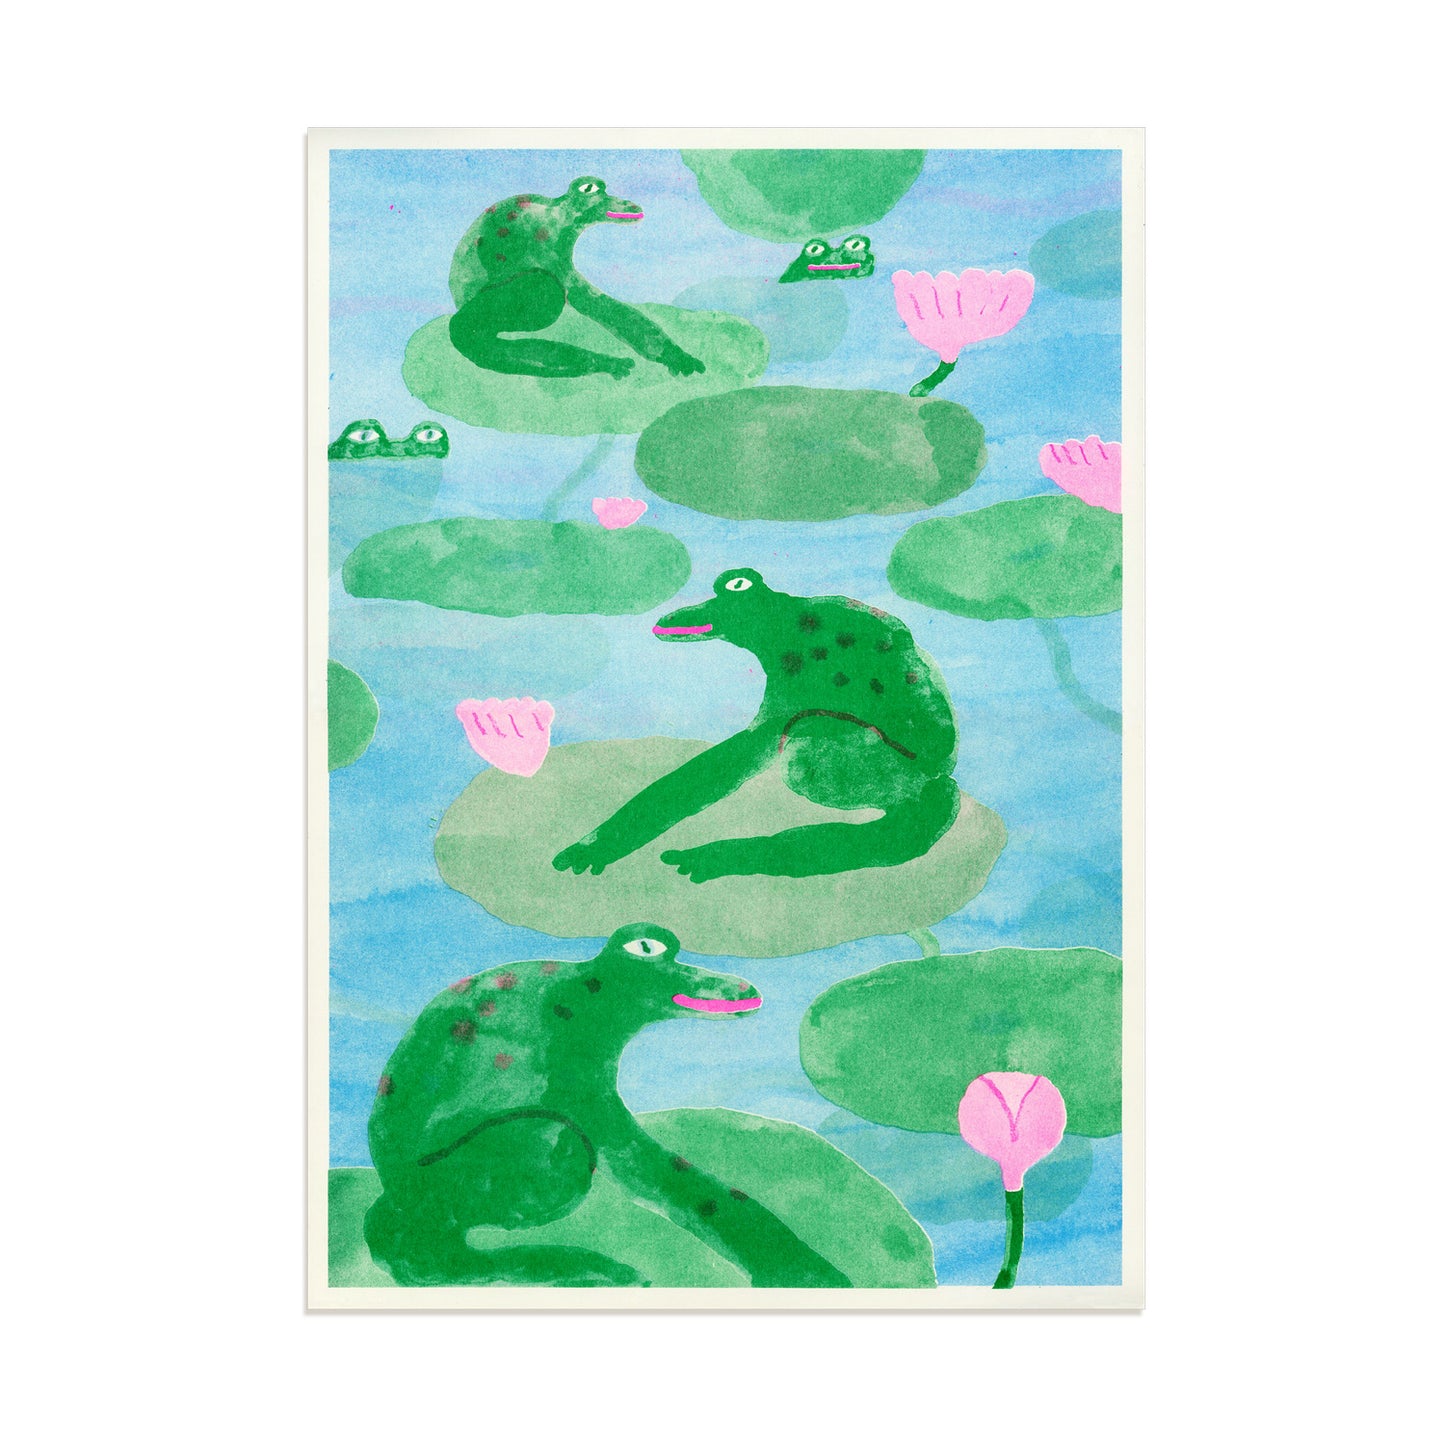 The Frog Pond - Print by Tom Bingham